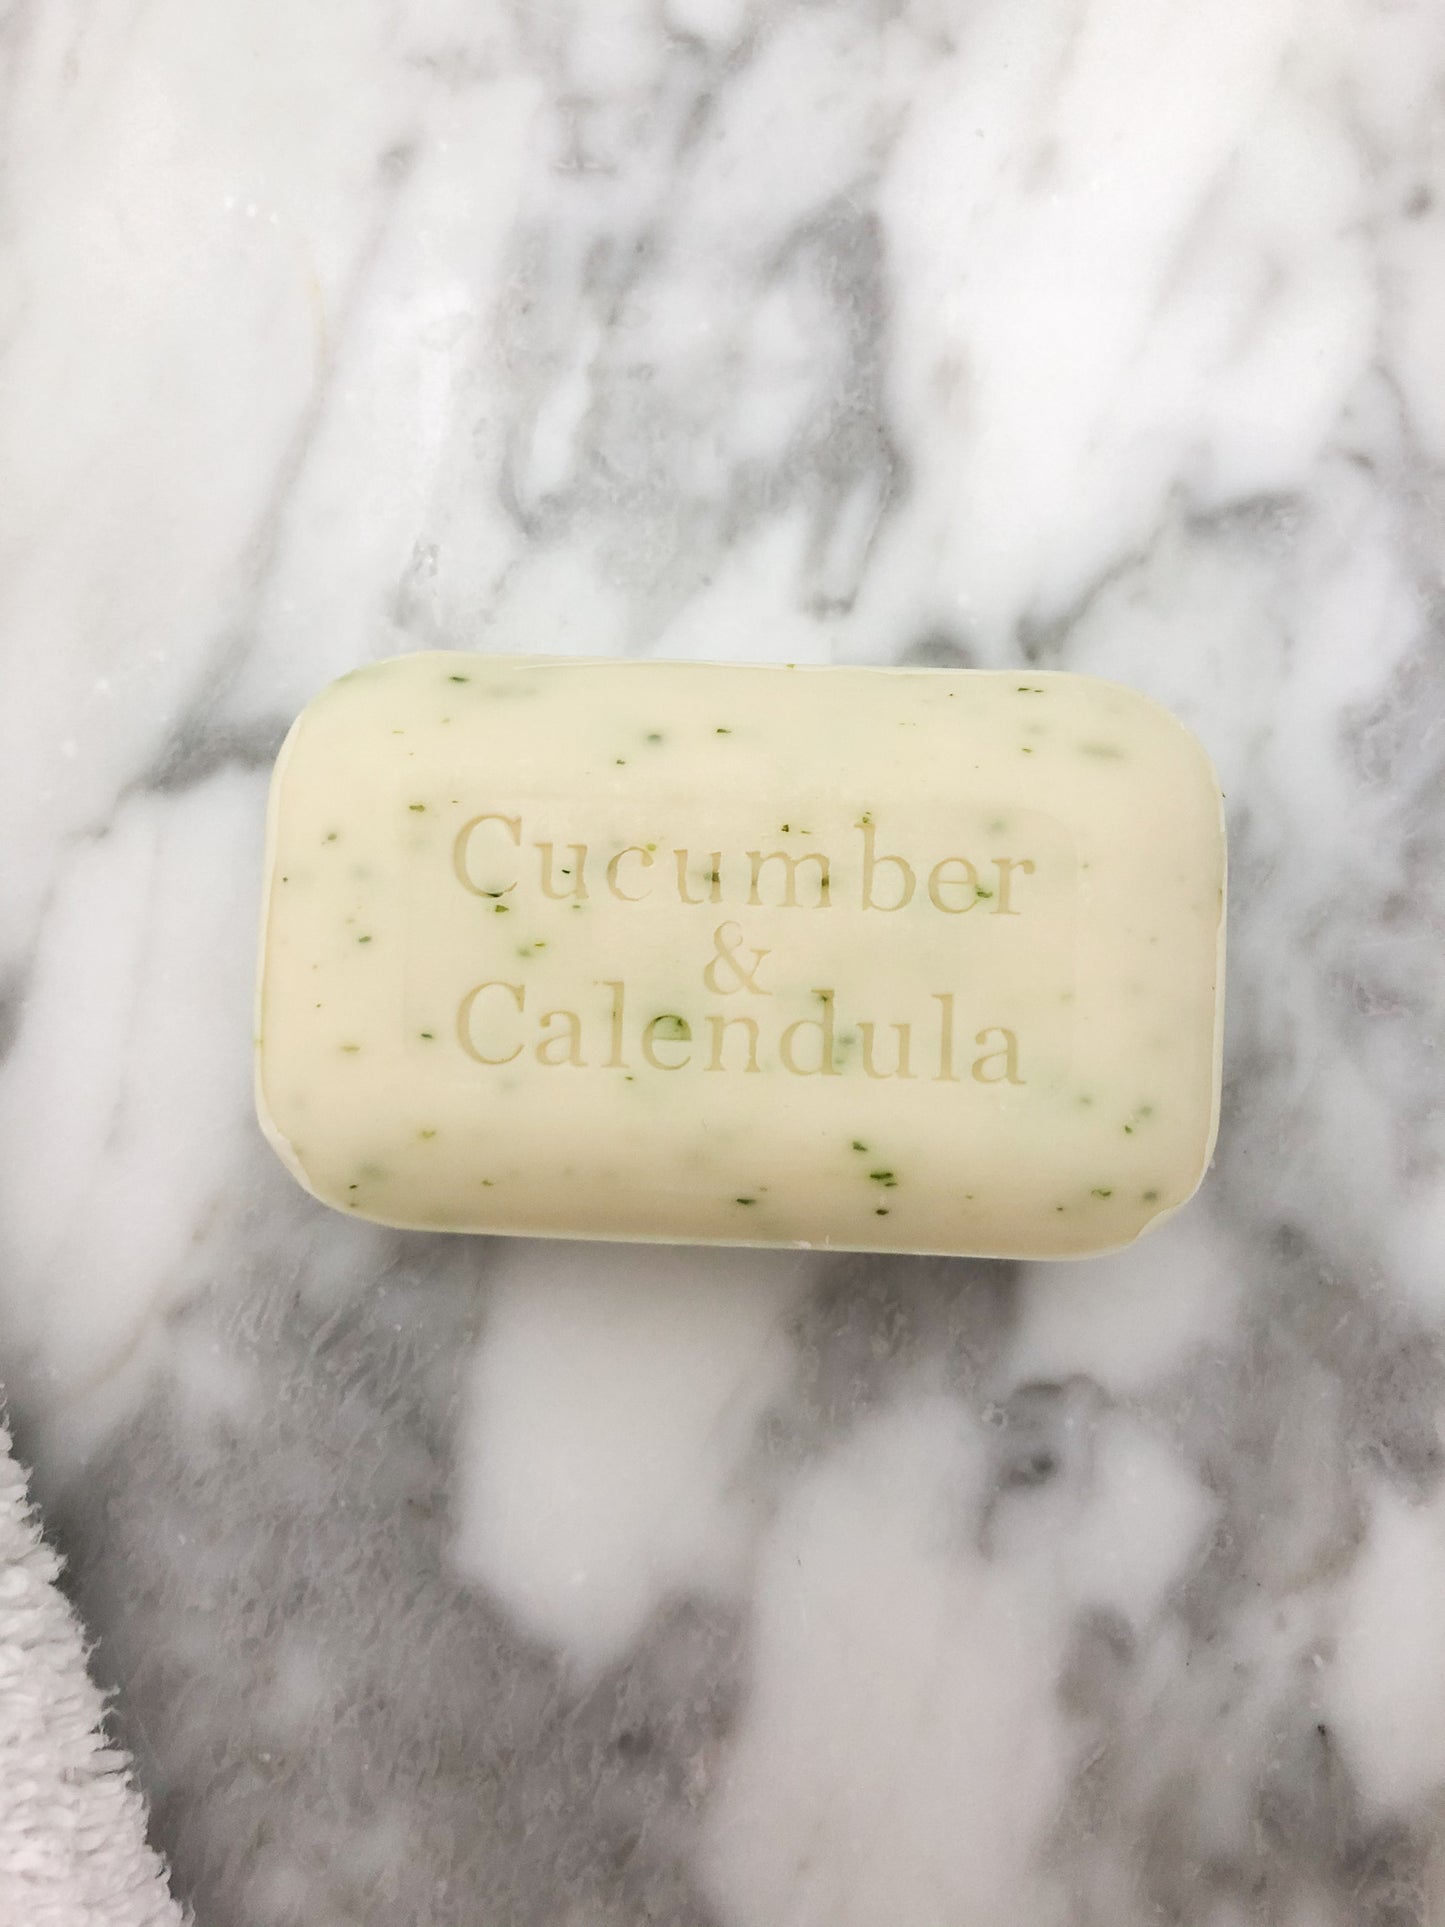 Cucumber and Calendula Pure Plant-Based Soap - Zero Waste + Biodegradable